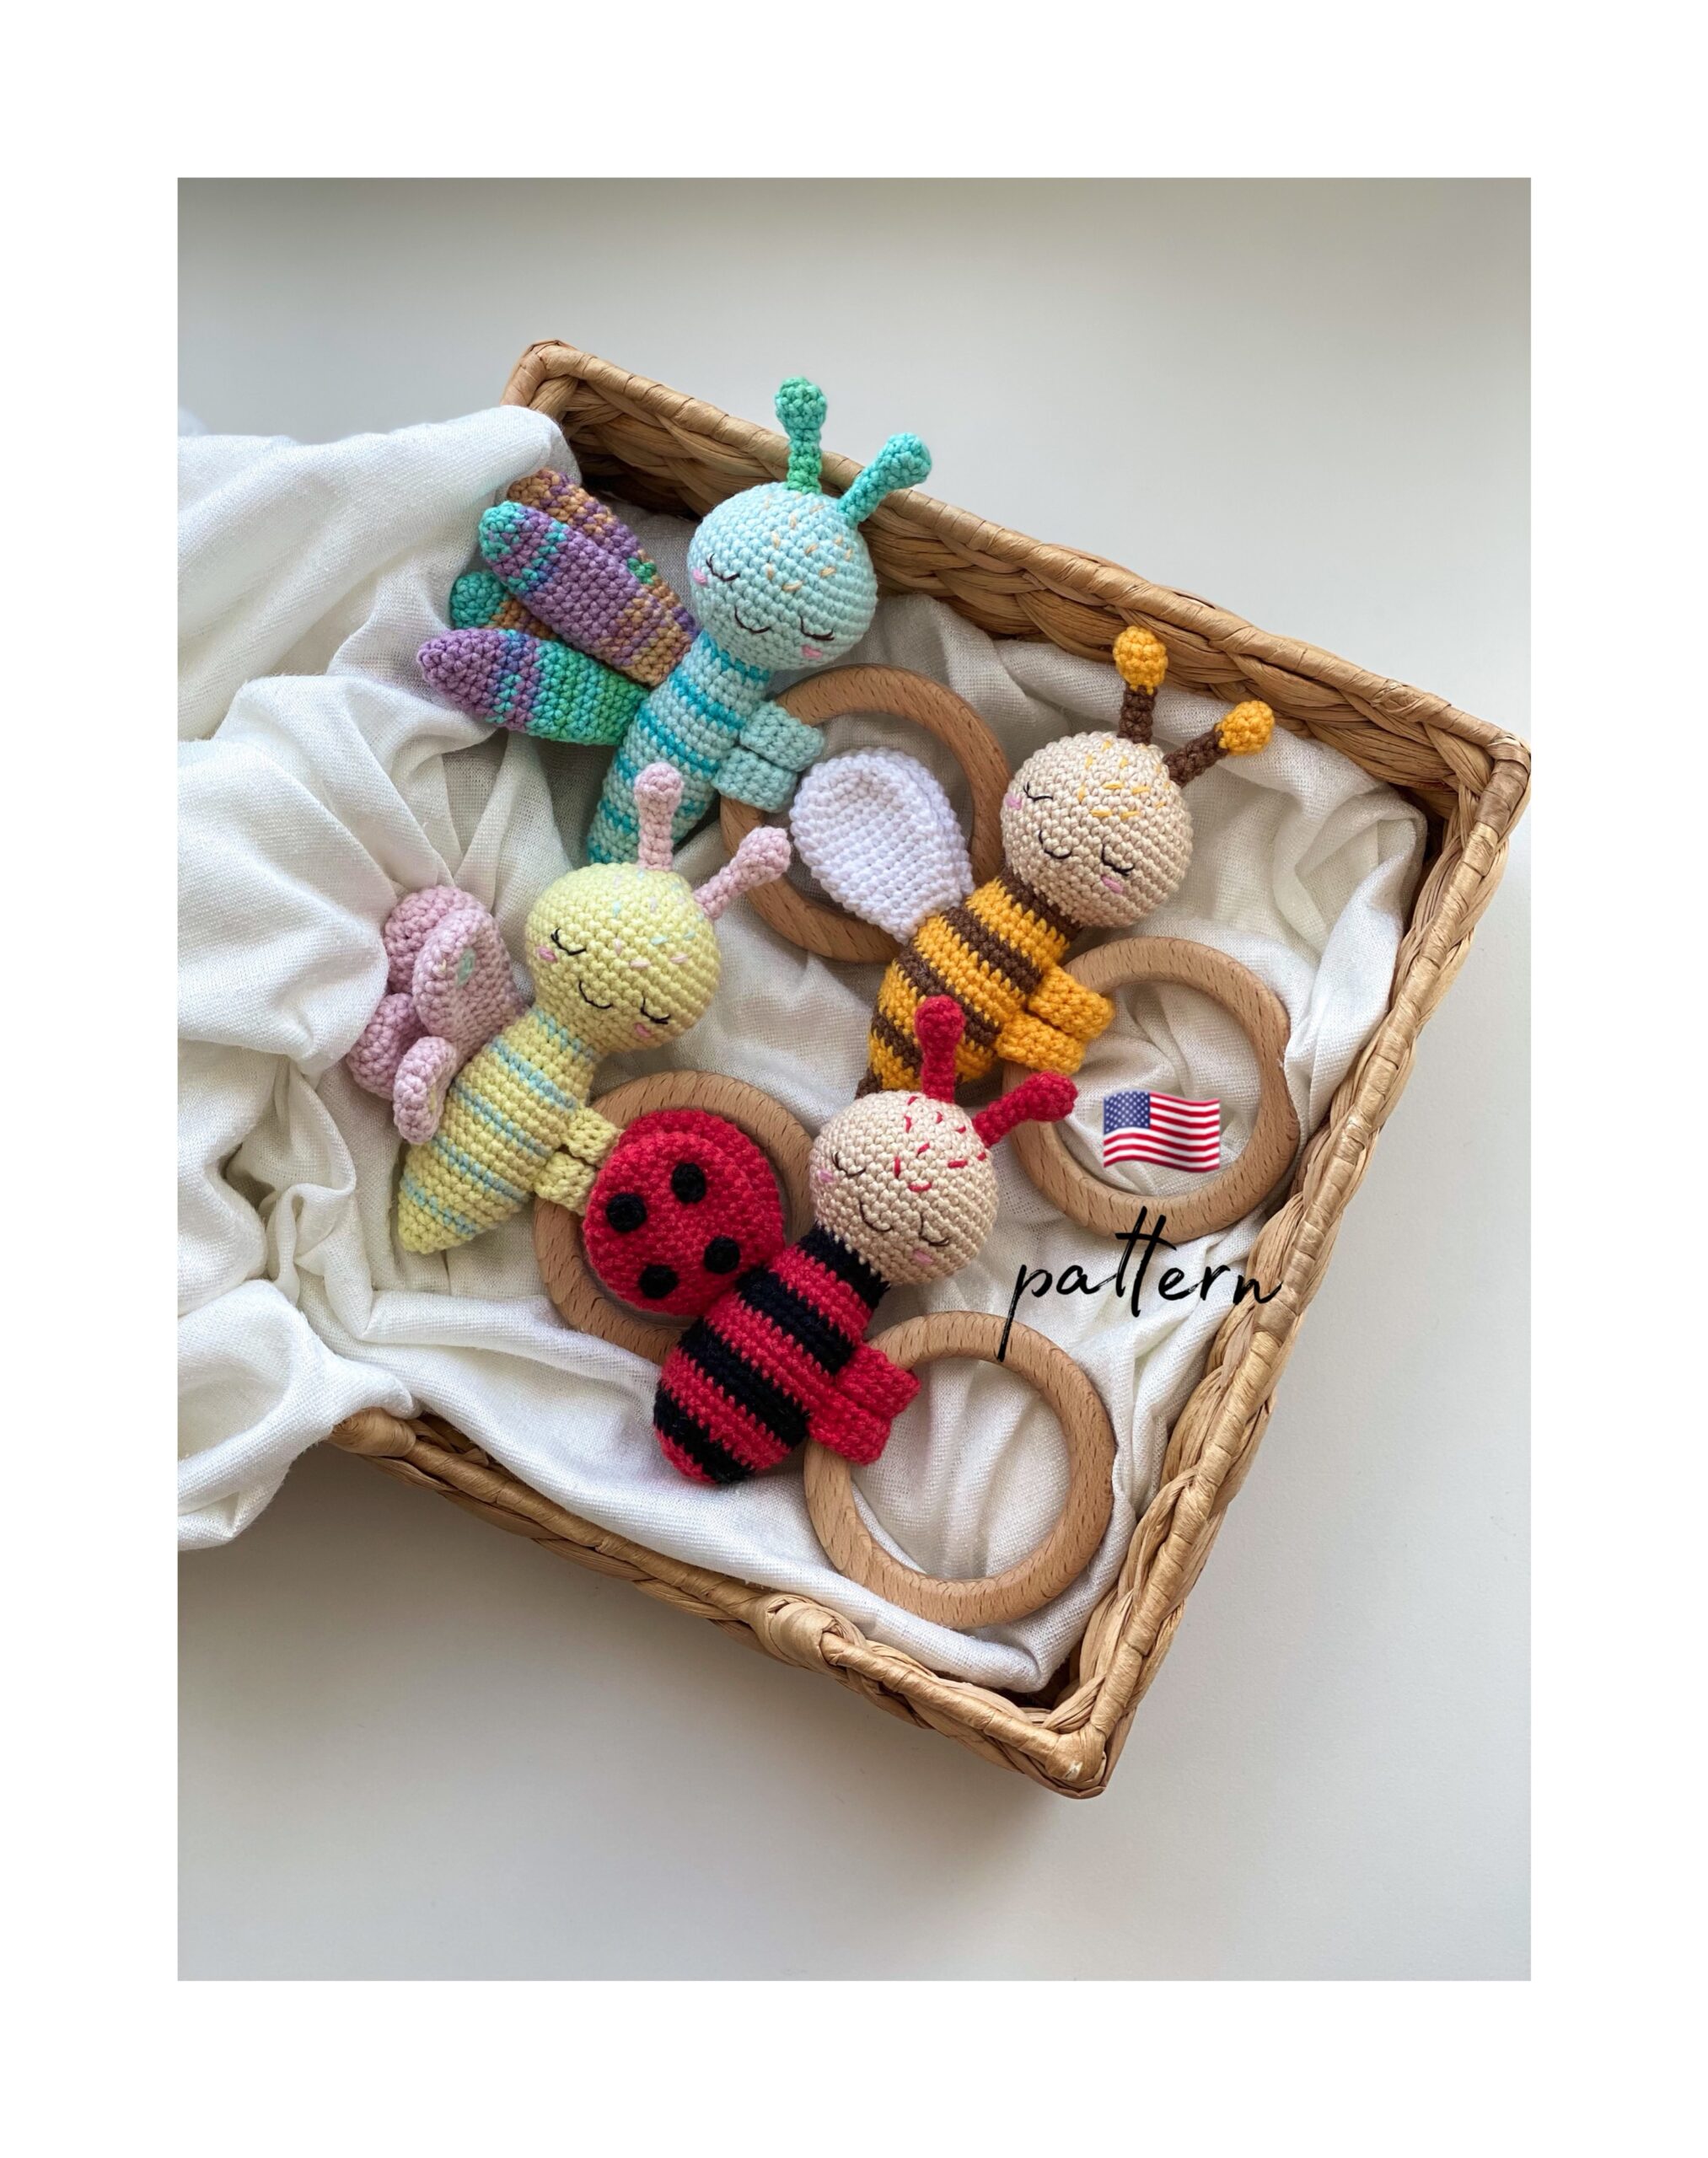 Crochet potato Organic toy 1pcs Teether teeth - HOMETOYS by Mariya Galatova™